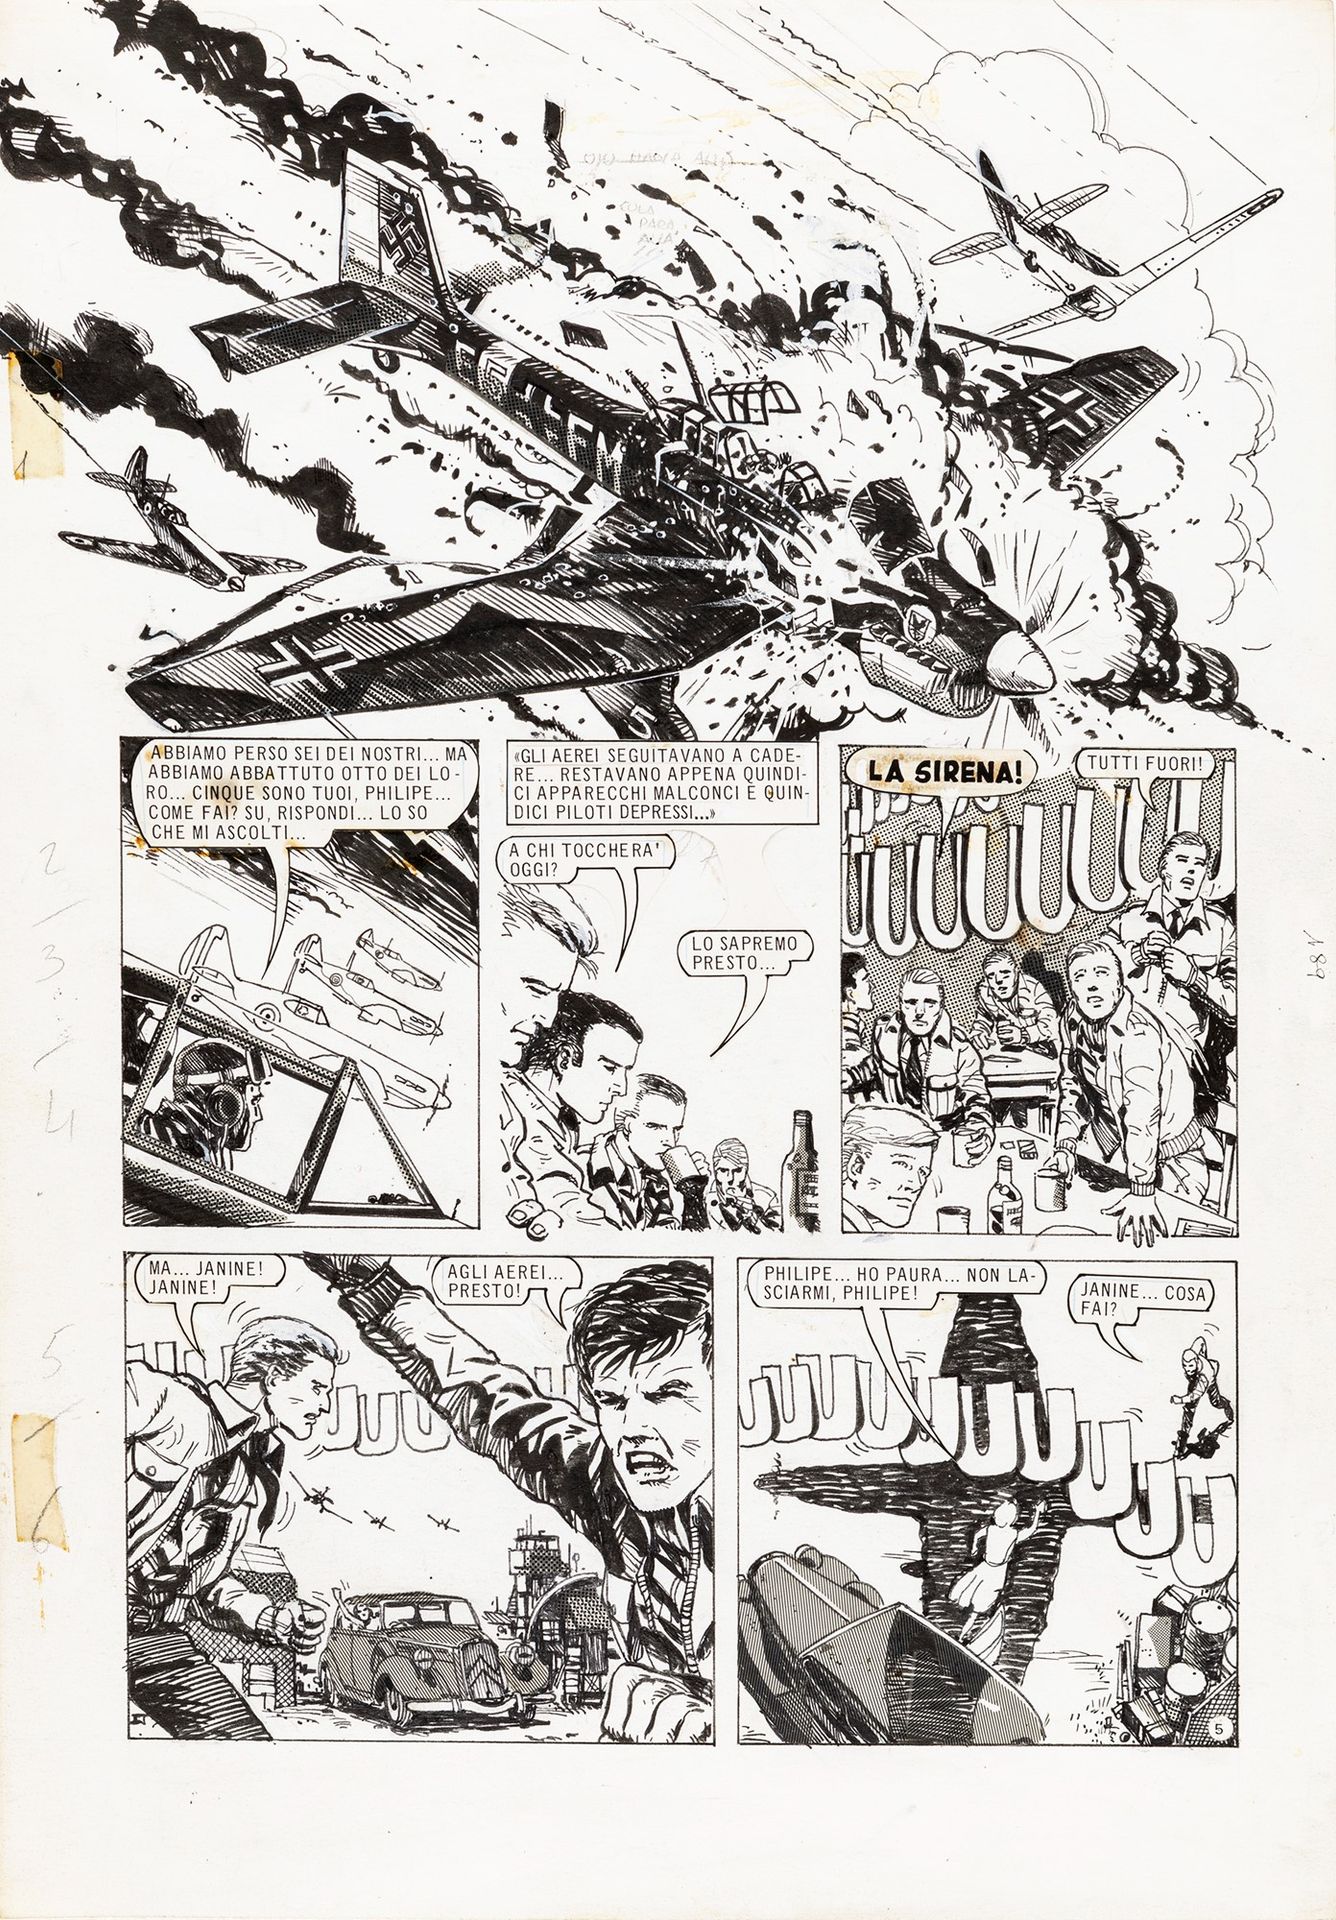 JUAN GIMENEZ Ace of Spades - Mission Accomplished, 1977

crayon, encre et zipato&hellip;